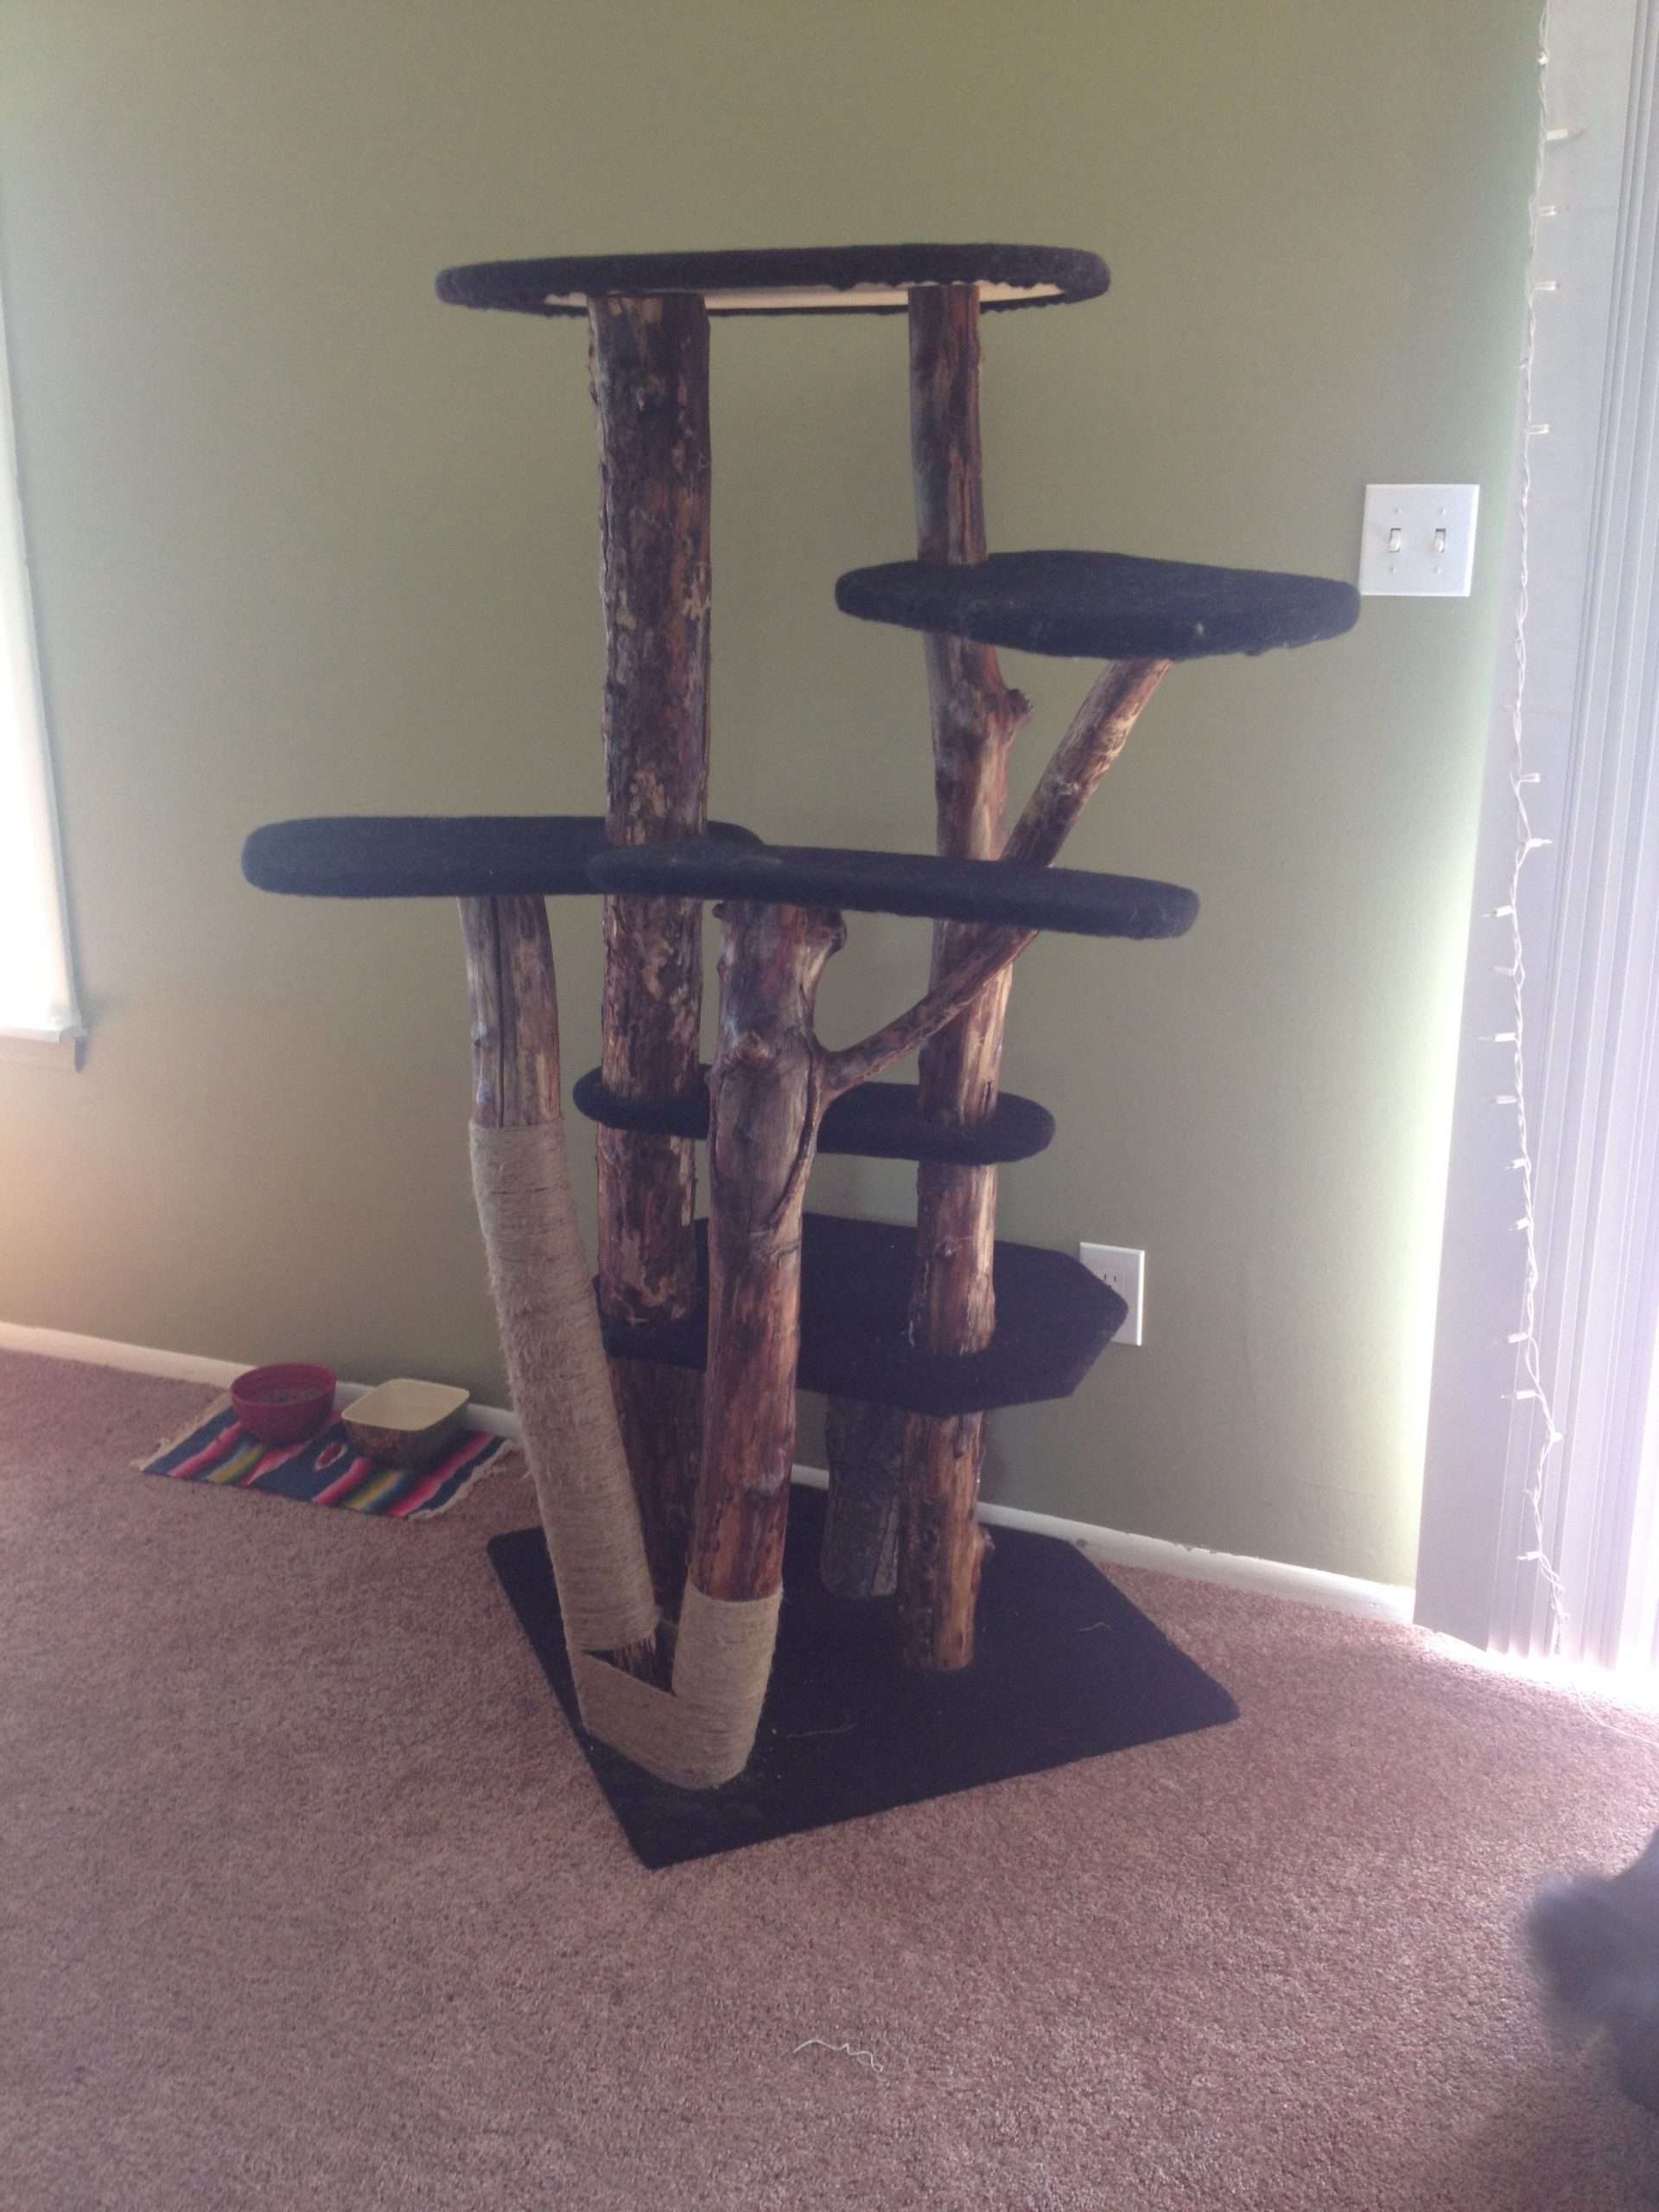 Homemade cat tree that I made!